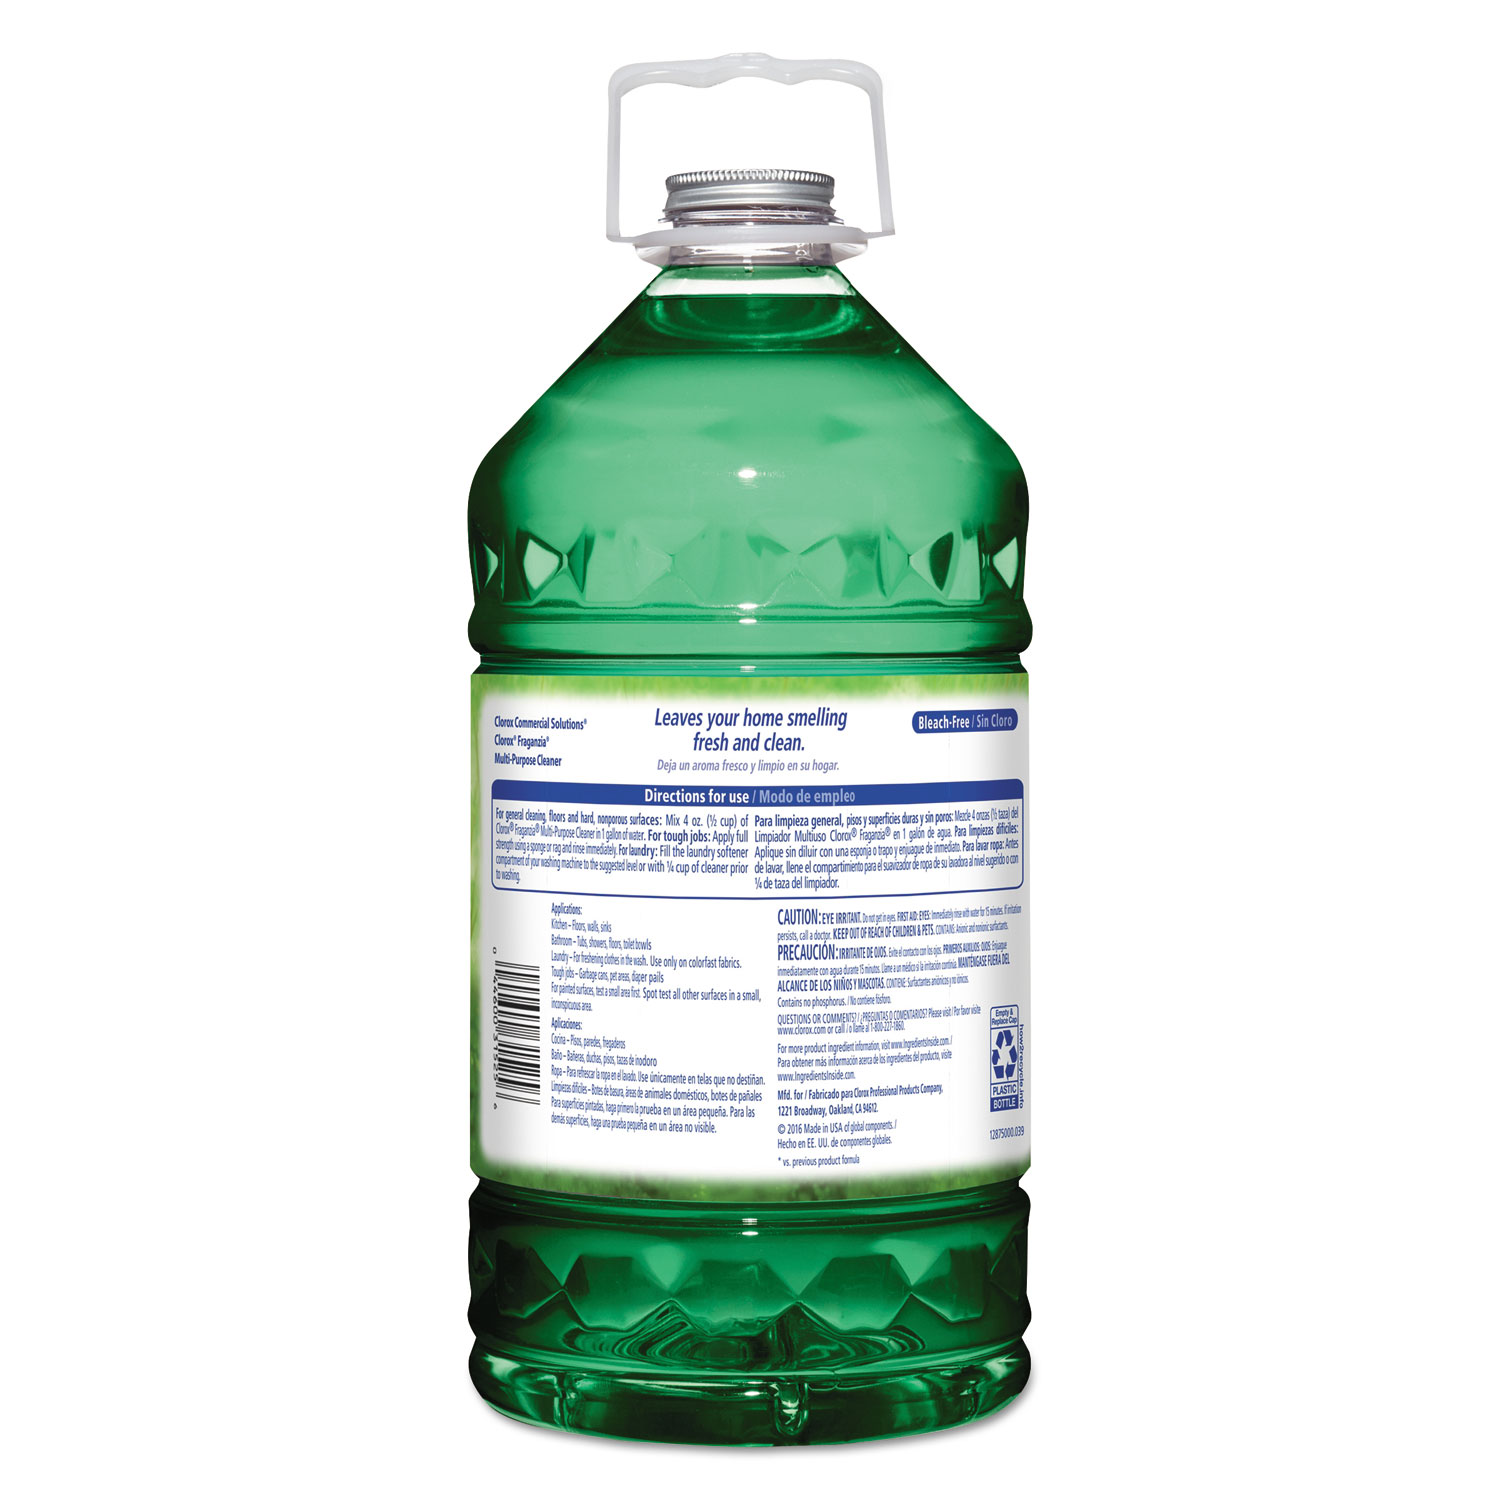 Fraganzia Multi-Purpose Cleaner, Forest Dew Scent, 175 oz Bottle